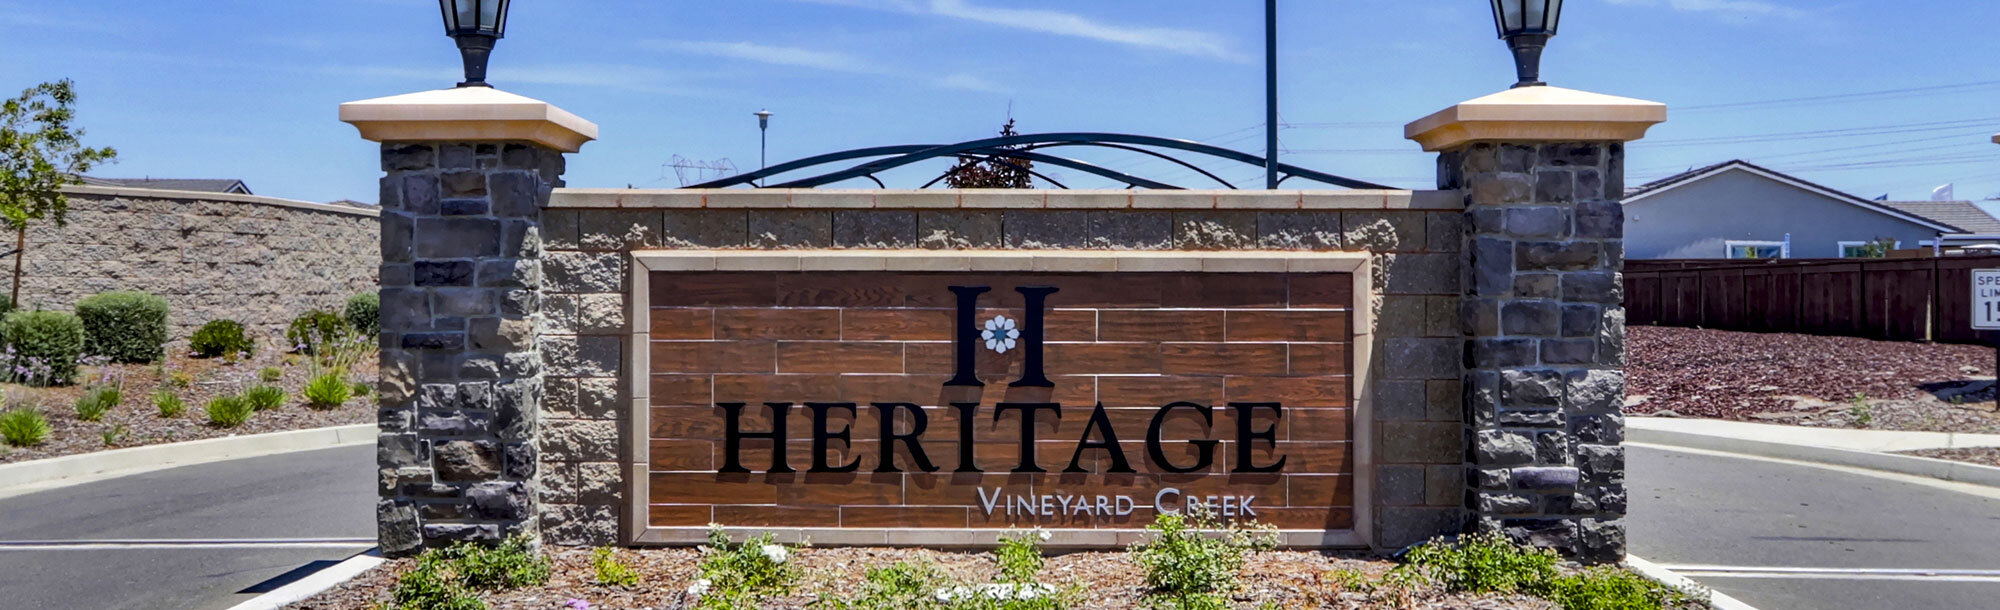 header heritage vineyard creek sacramento